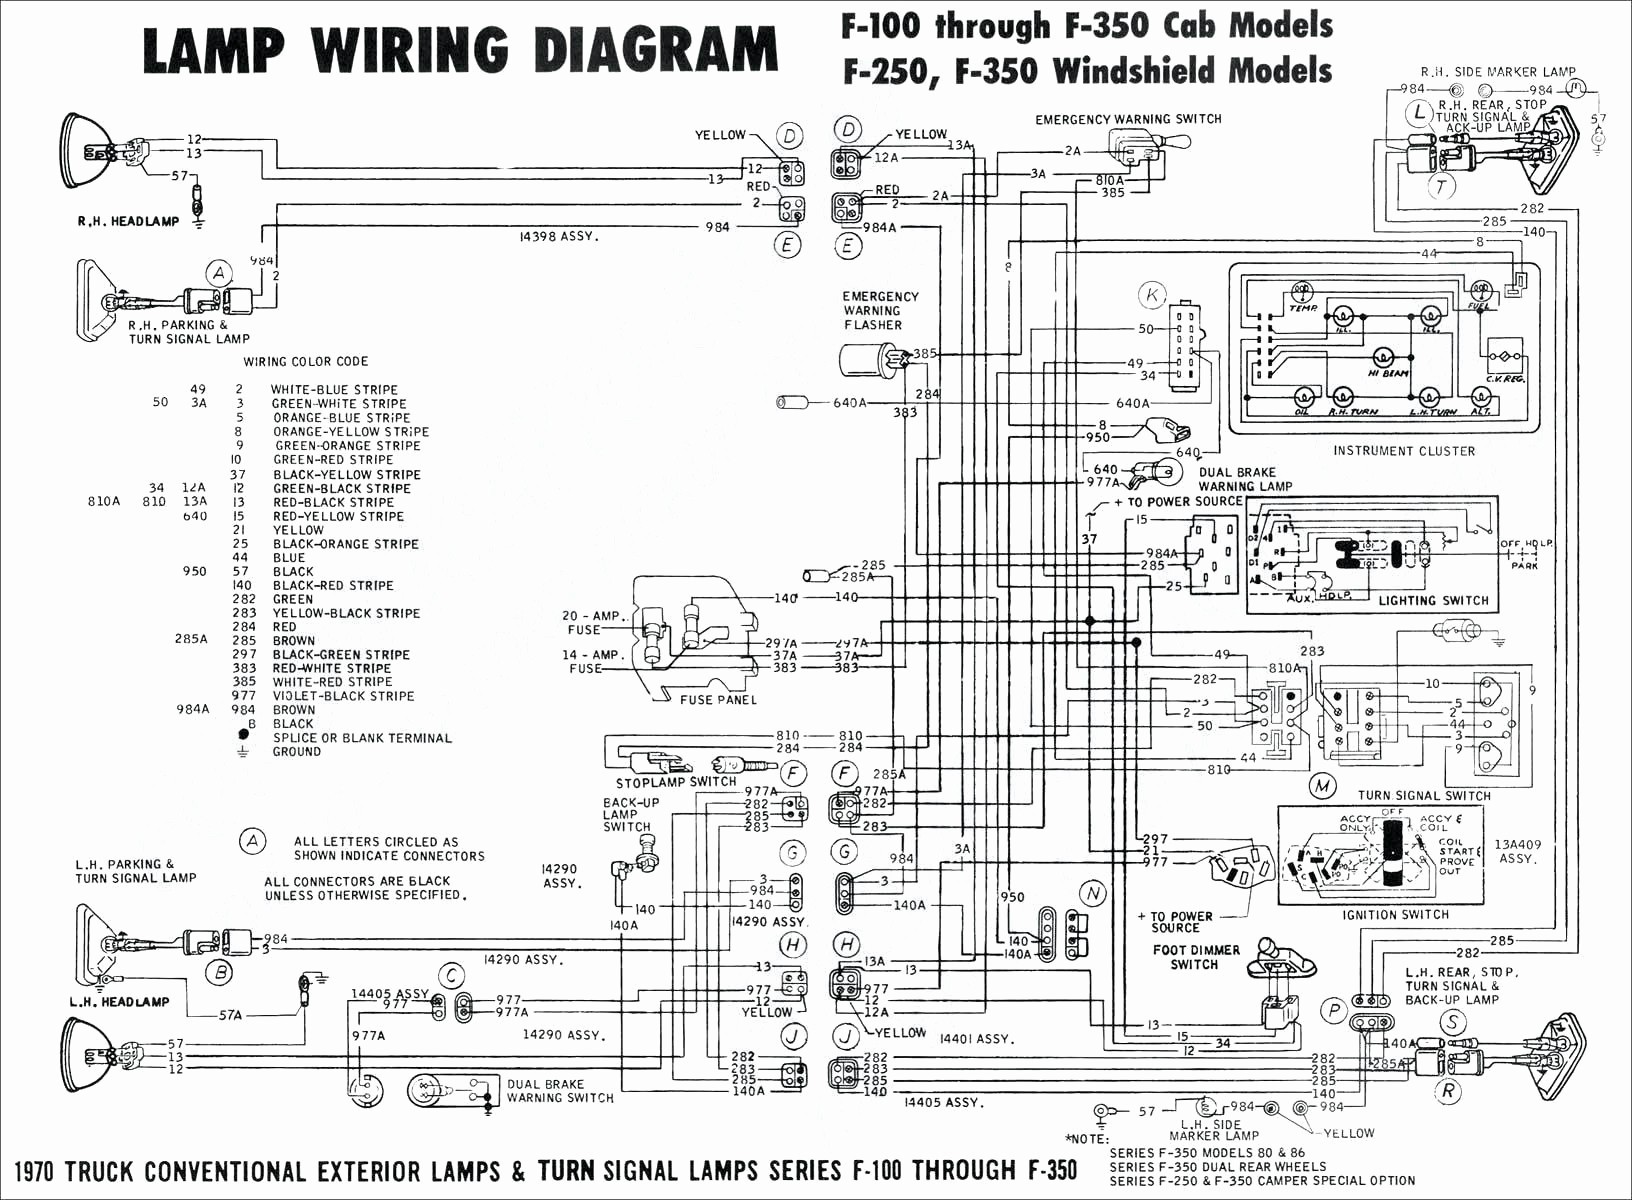 Car Trailer Wiring Diagram Uk 2004 Cadillac Escalade Trailer Wiring Worksheet and Wiring Diagram • Of Car Trailer Wiring Diagram Uk